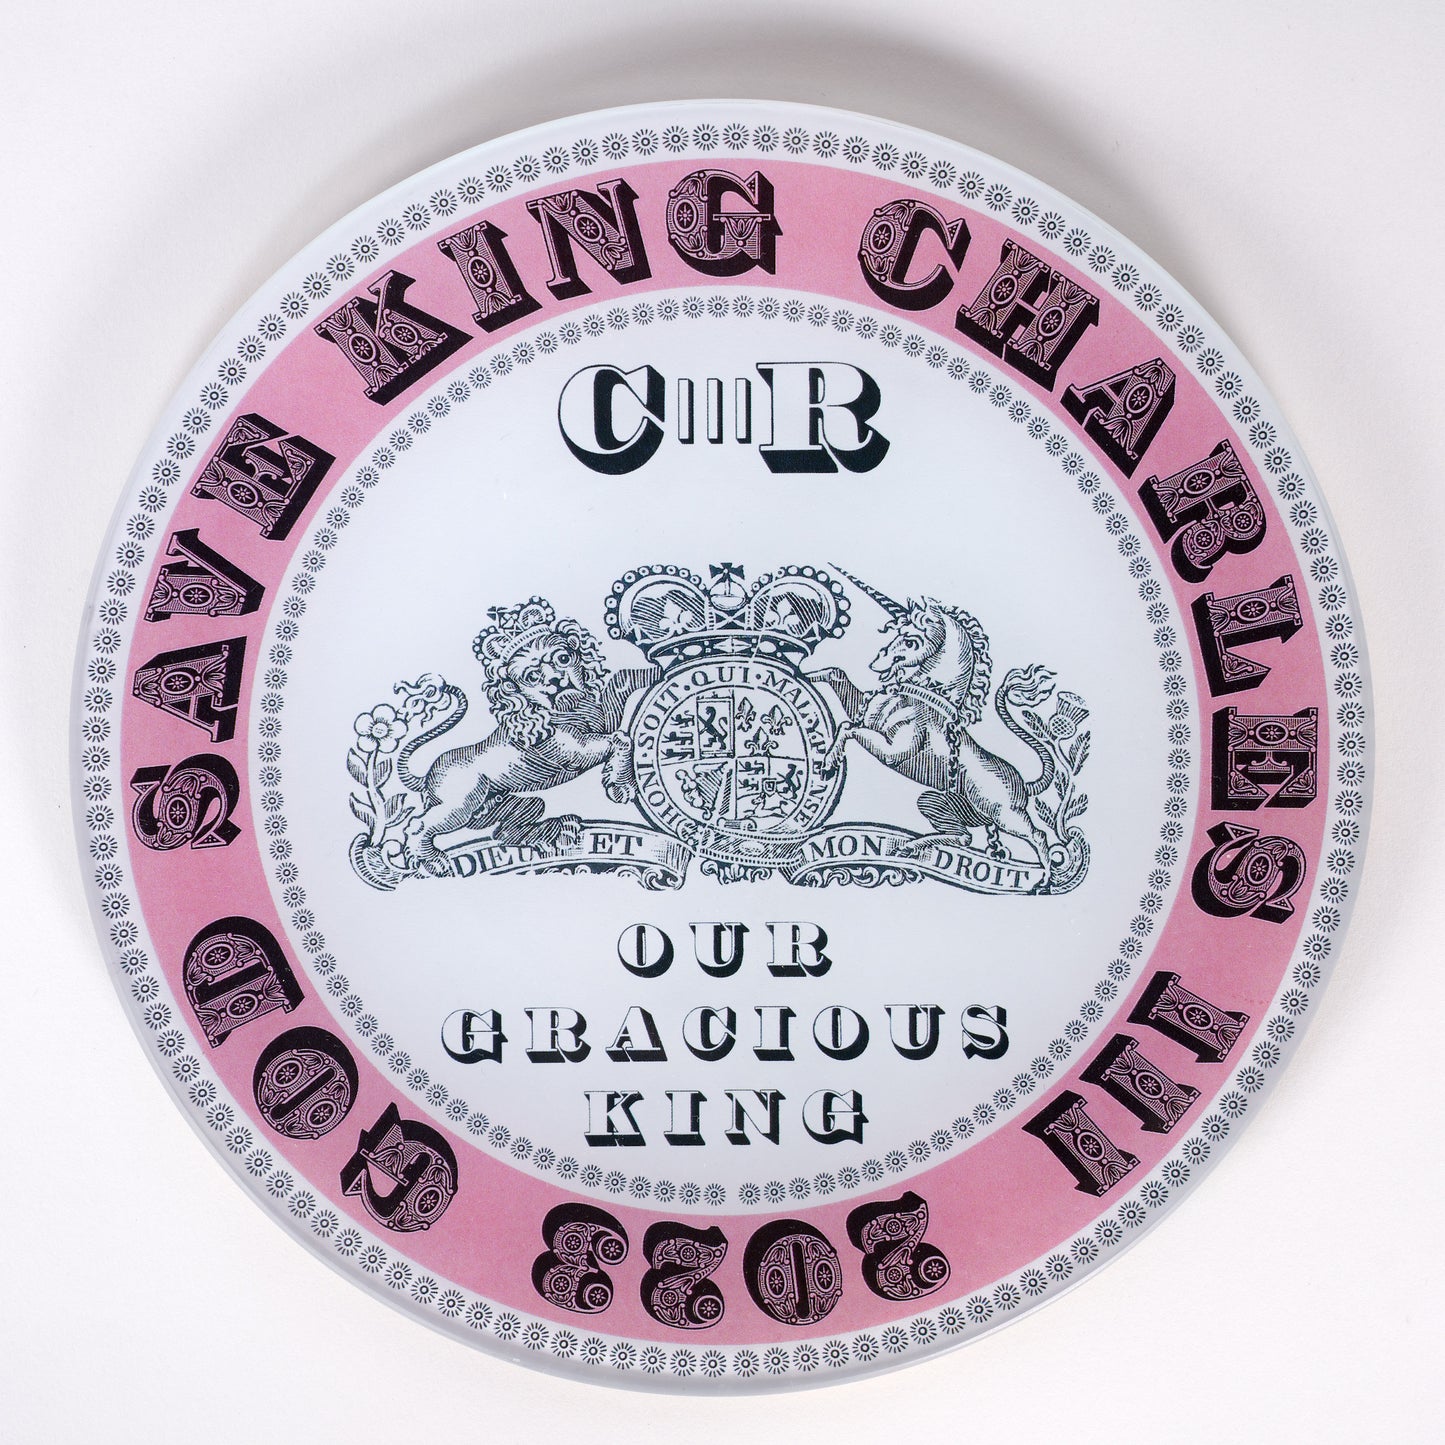 7” 'King Charles III 2023' Commemorative Decoupage Plate - Pink